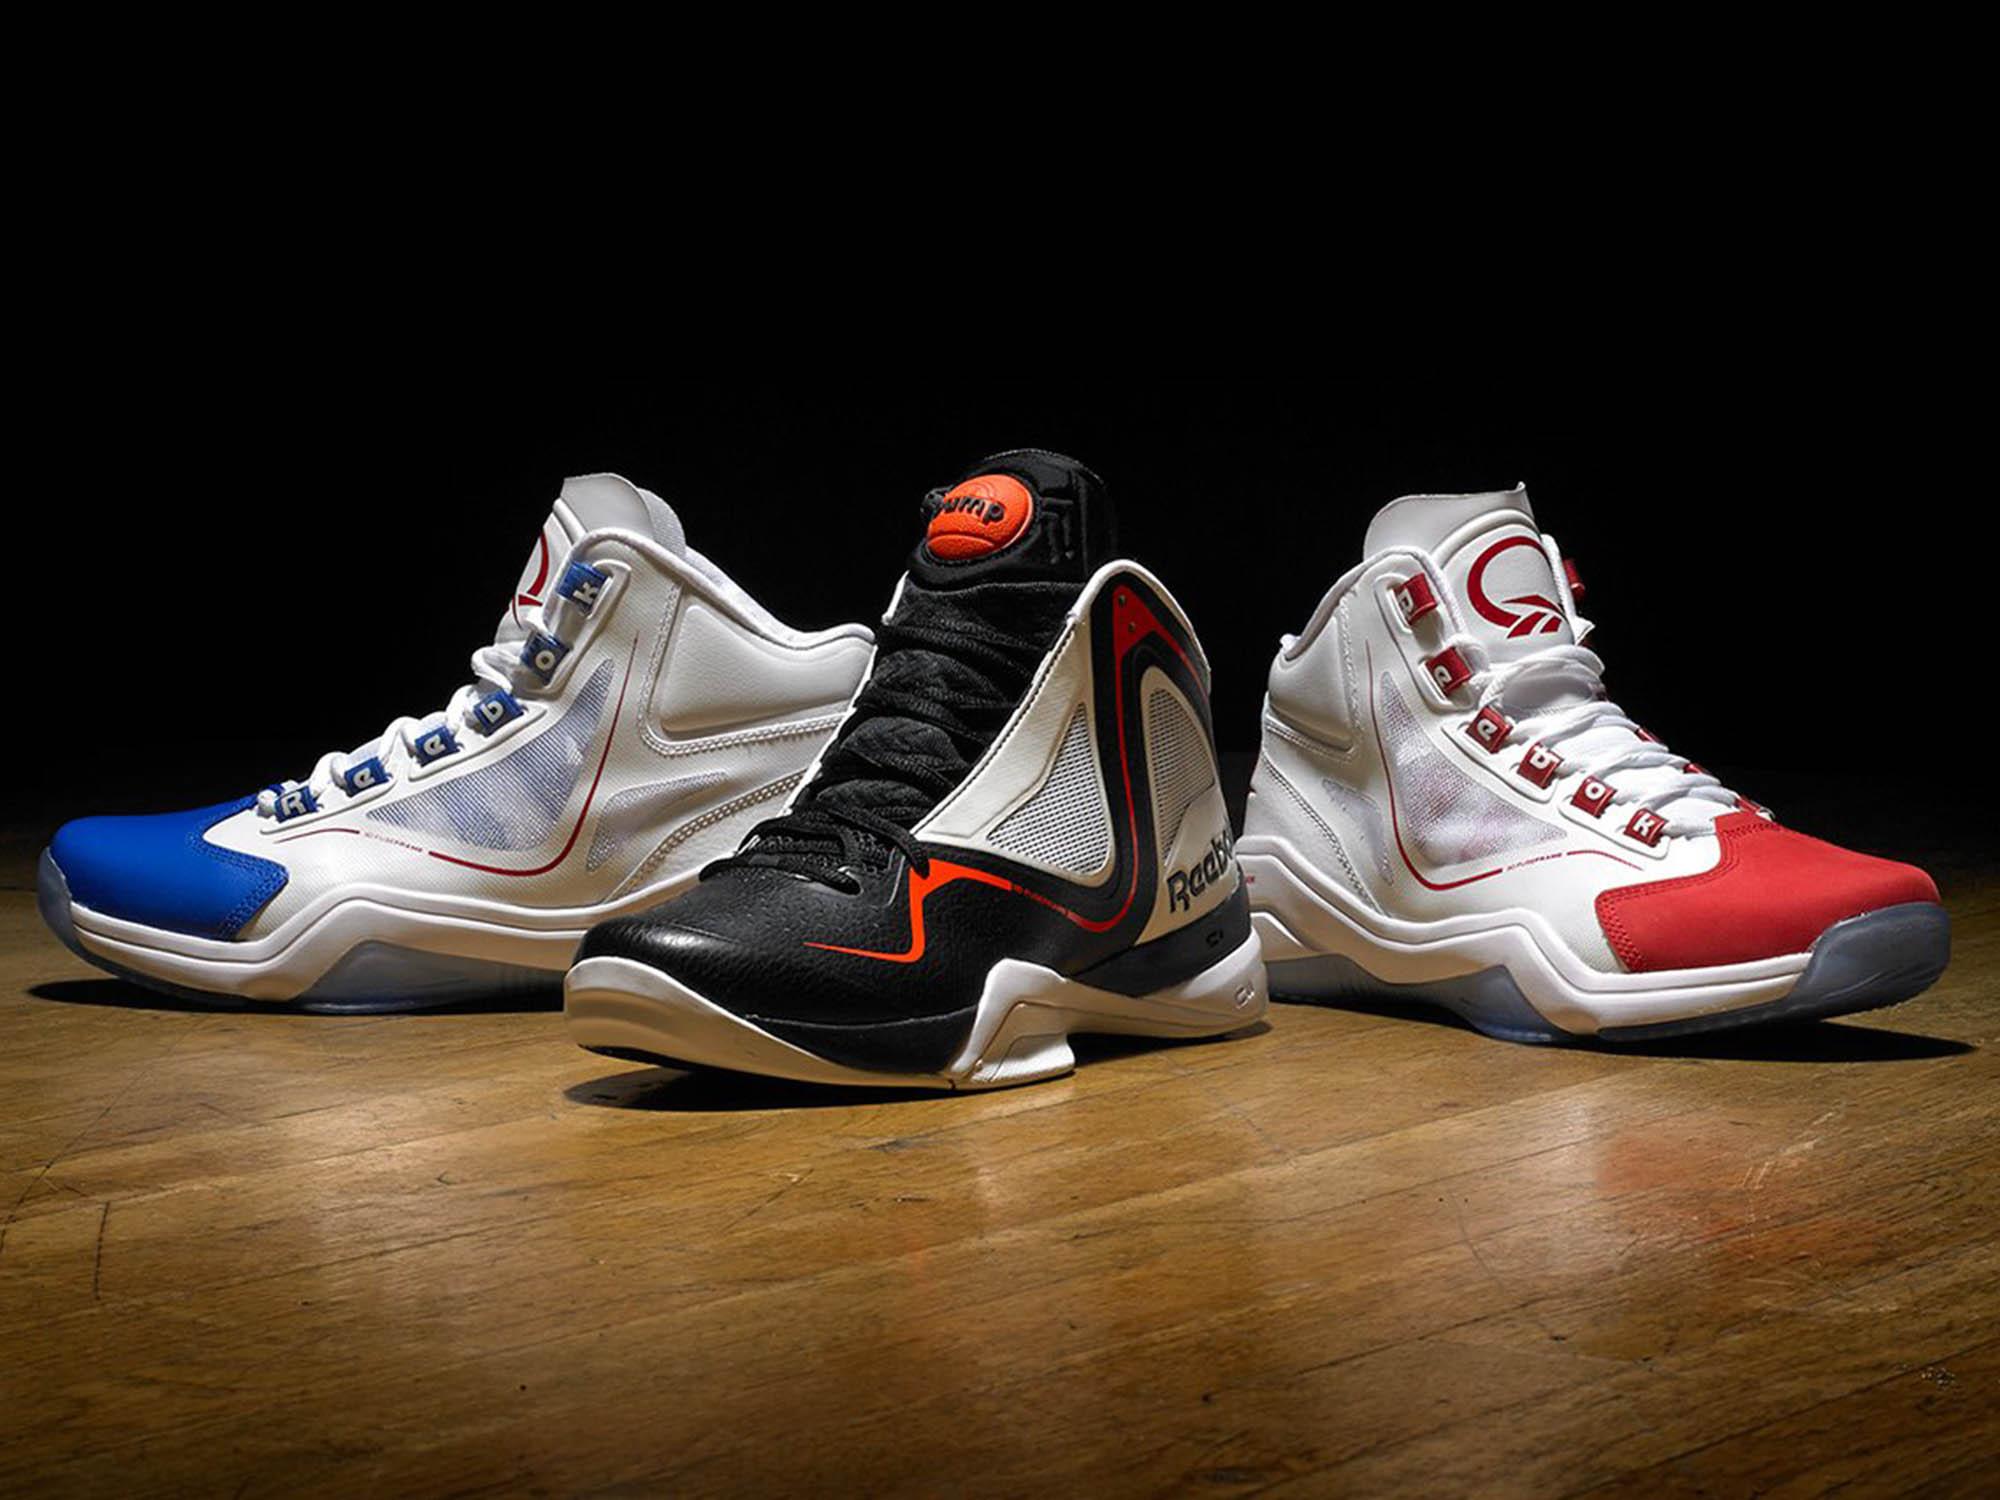  Линия обуви для баскетболистов